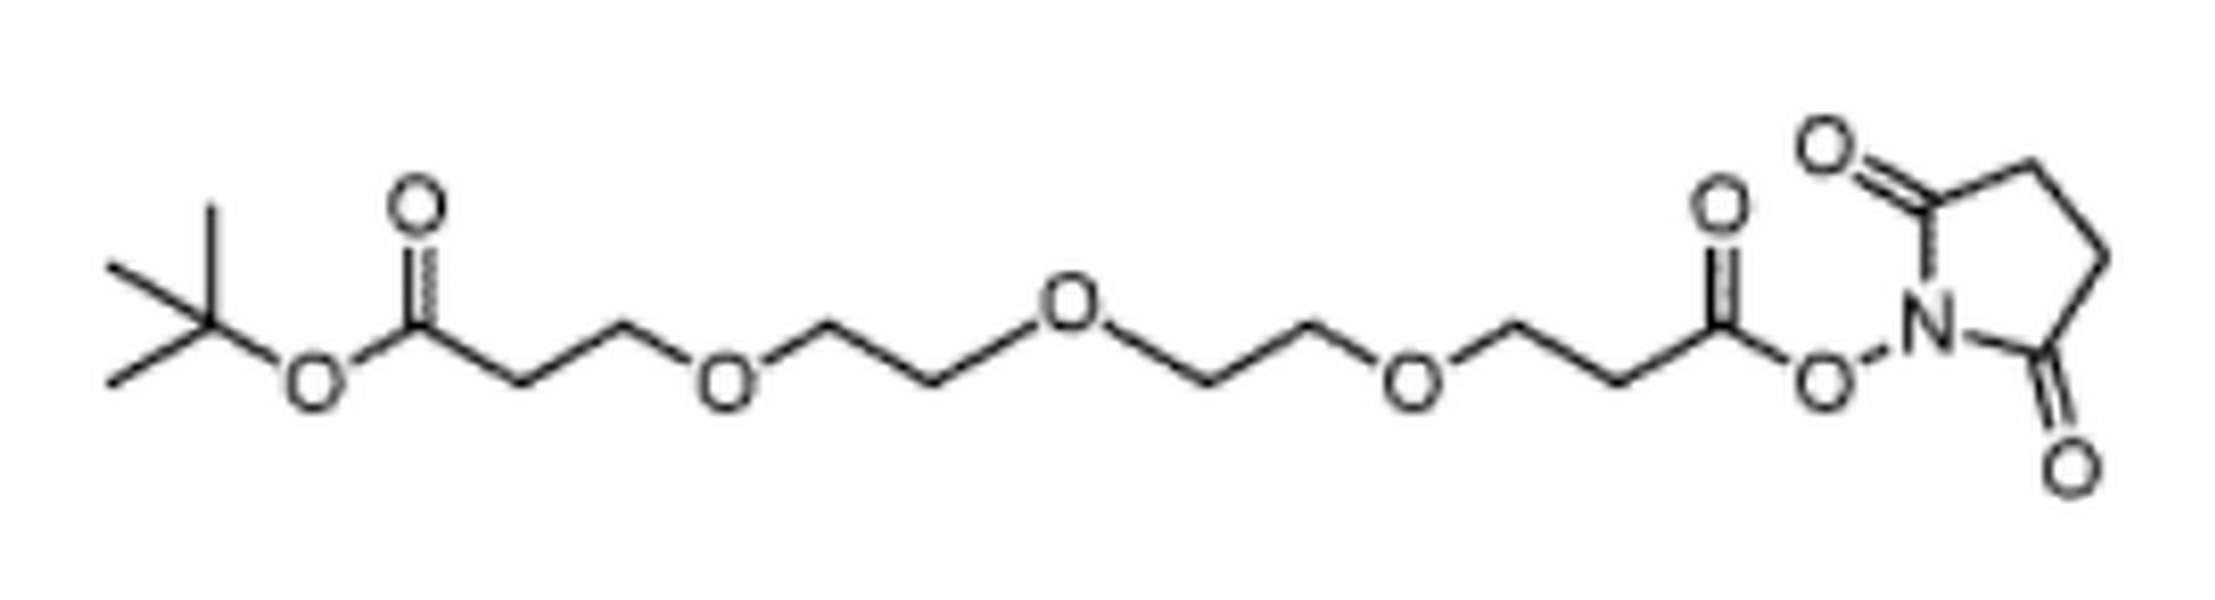 t-Butoxycarbonyl-PEG3-NHS ester